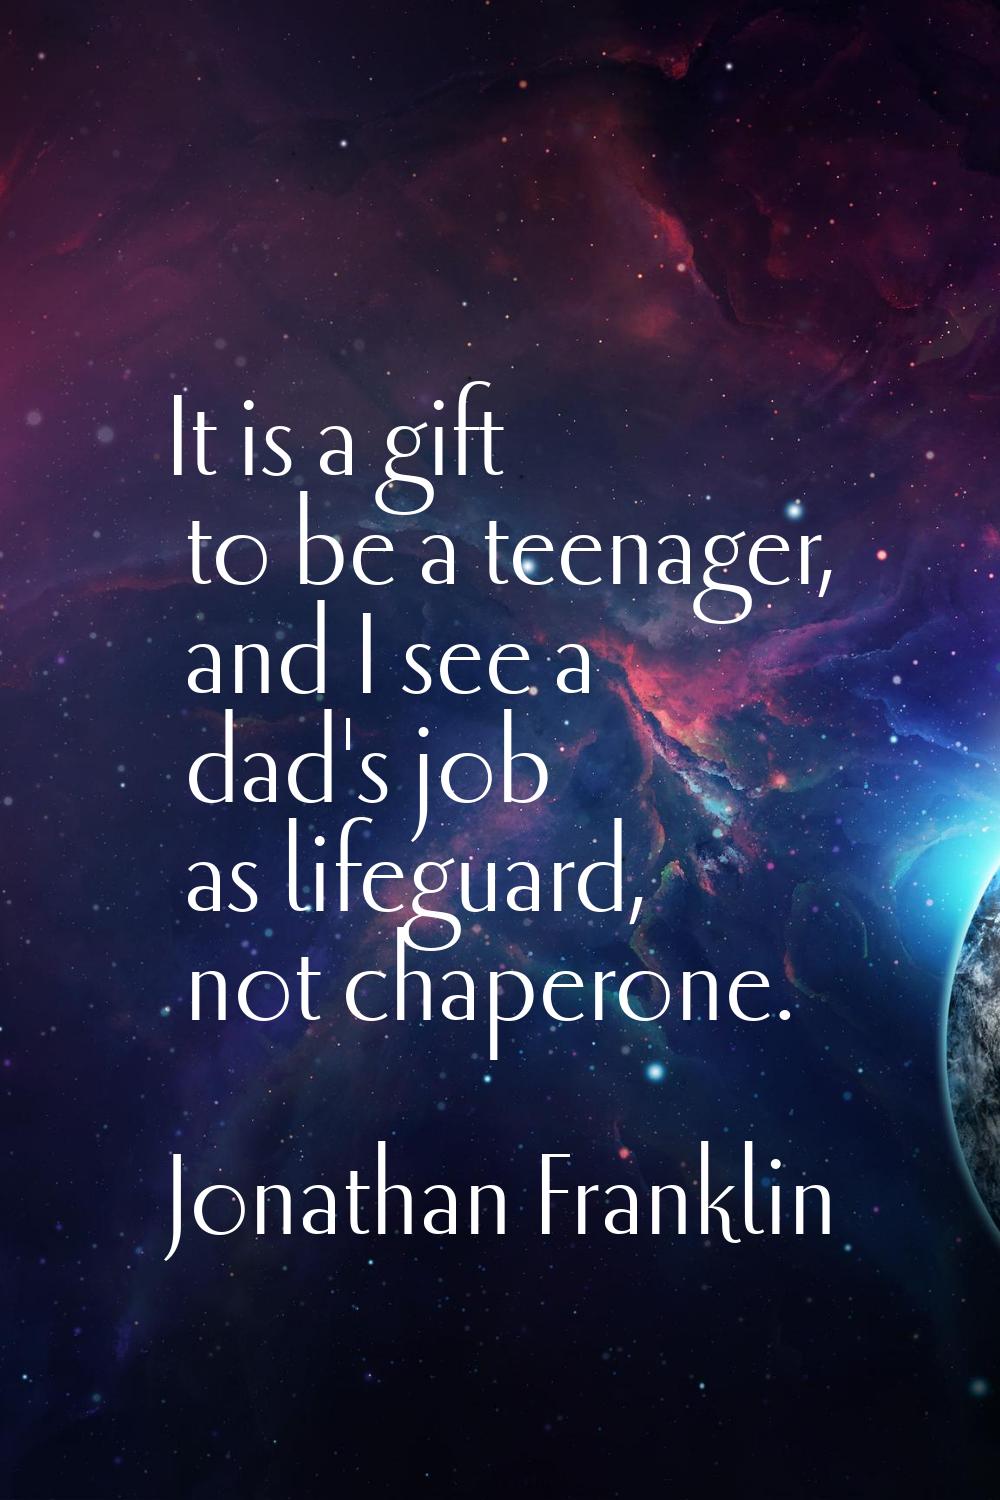 It is a gift to be a teenager, and I see a dad's job as lifeguard, not chaperone.